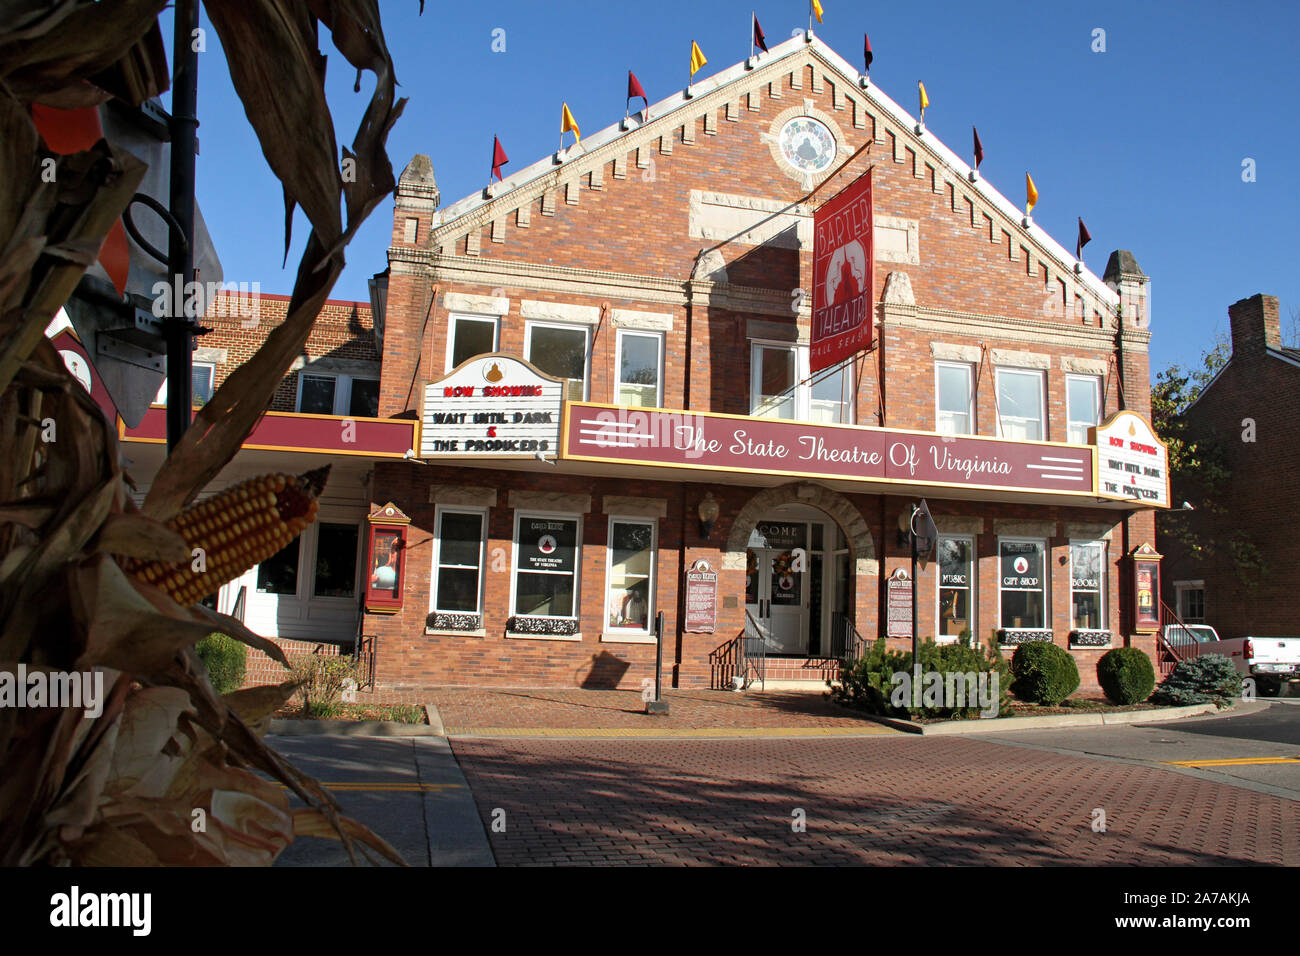 The historical Barter Theatre in downtown Abingdon, VA, USA Stock Photo